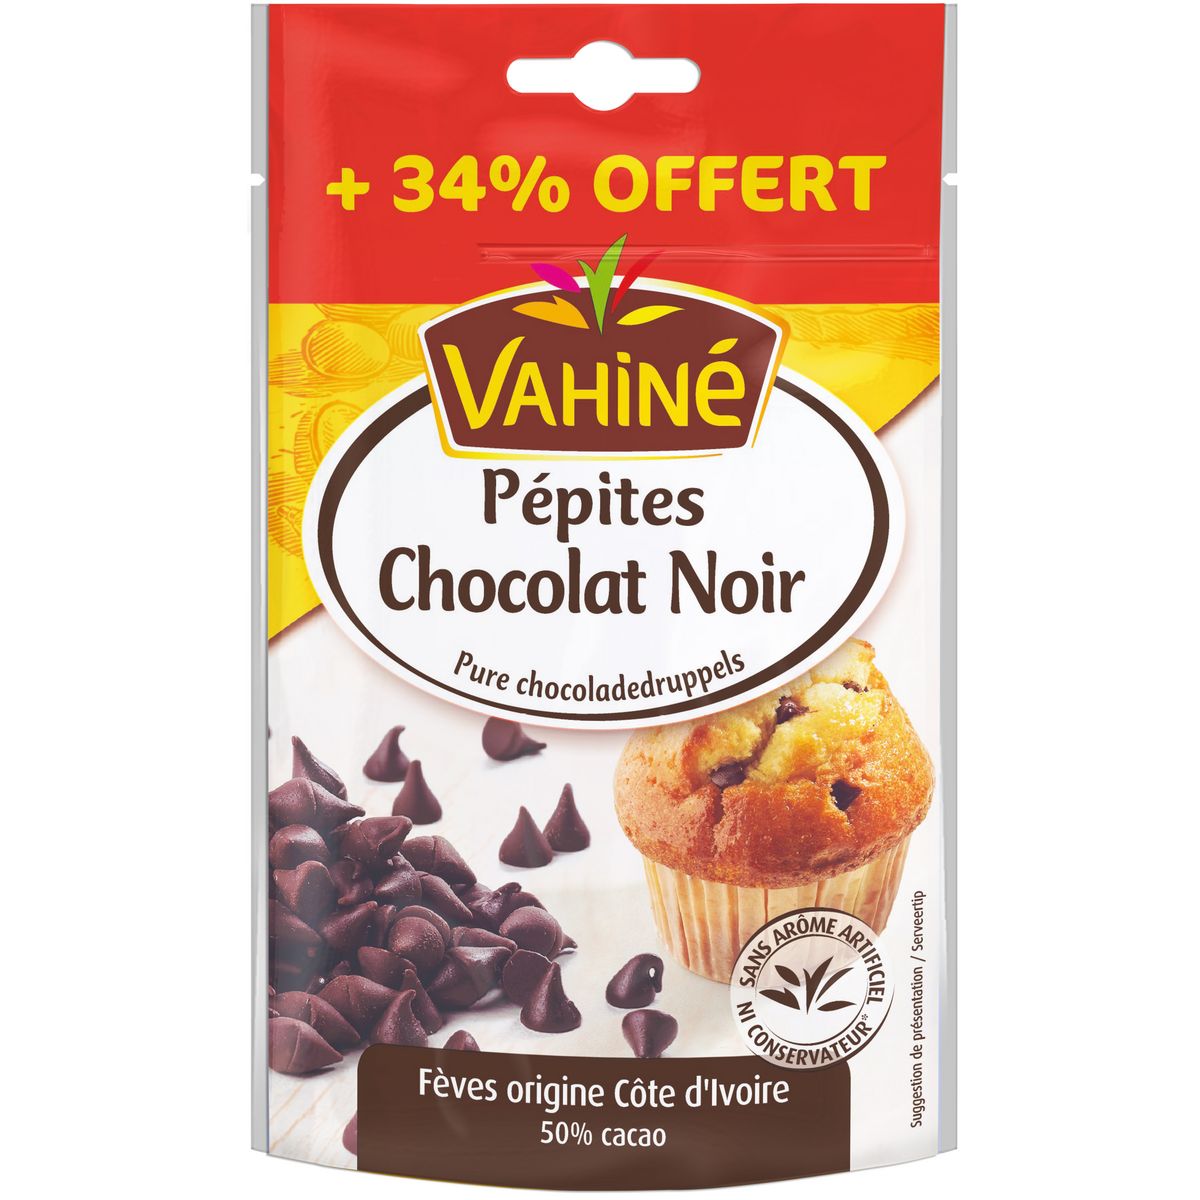 VAHINE Pépites chocolat noir 34% offert 134g